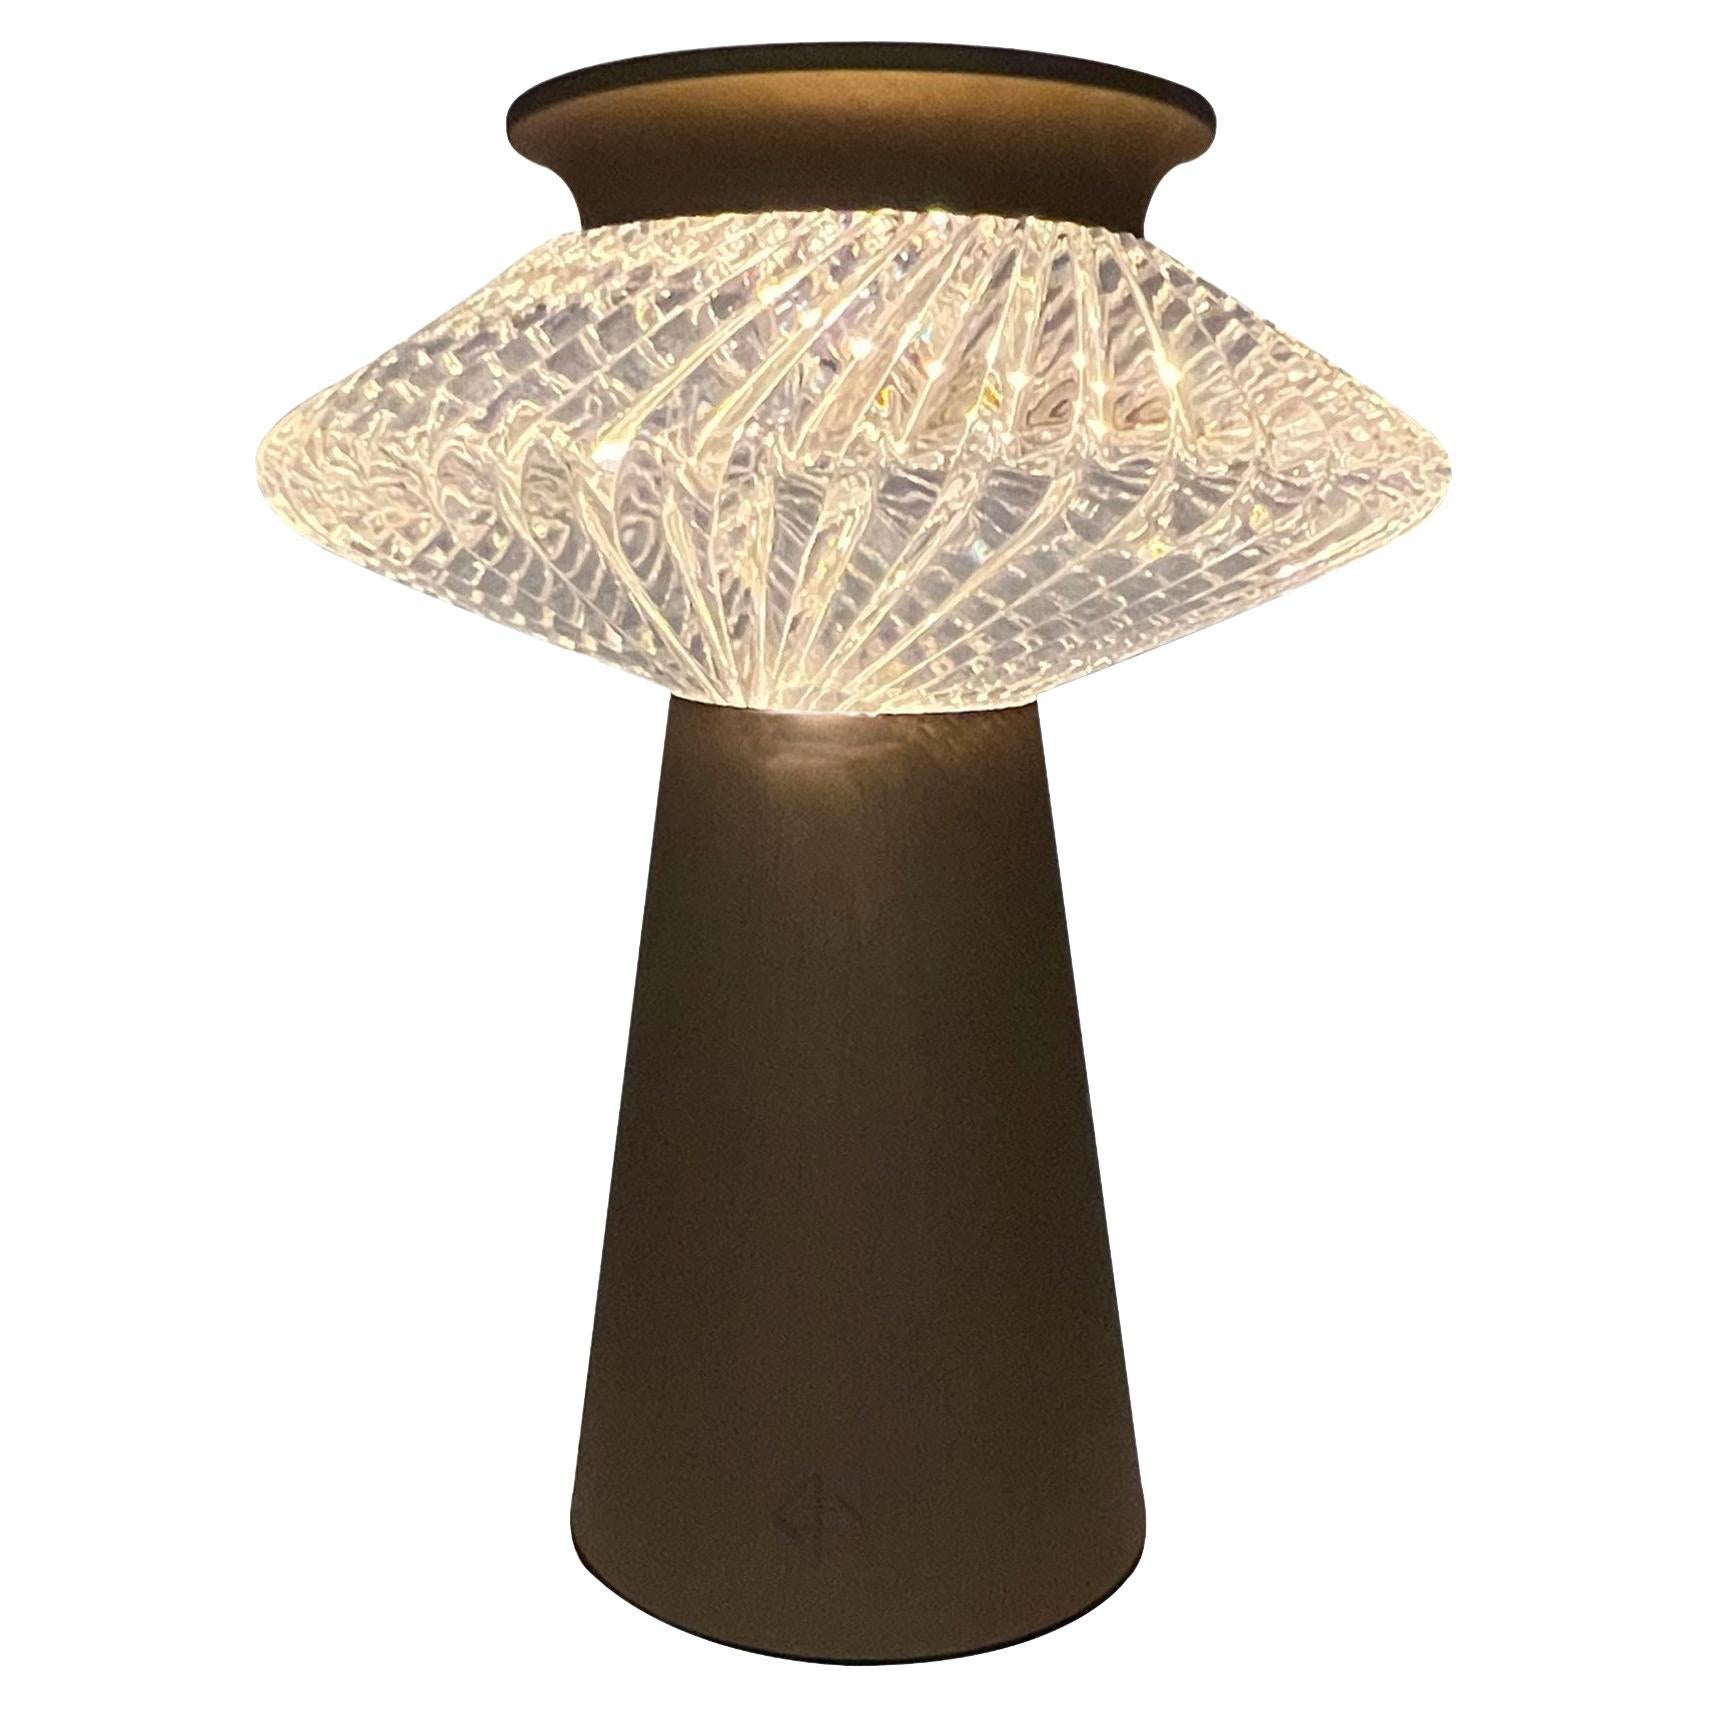 The Spiral Portable LED Lamp in Glass and Bronze par André Fu Living en vente